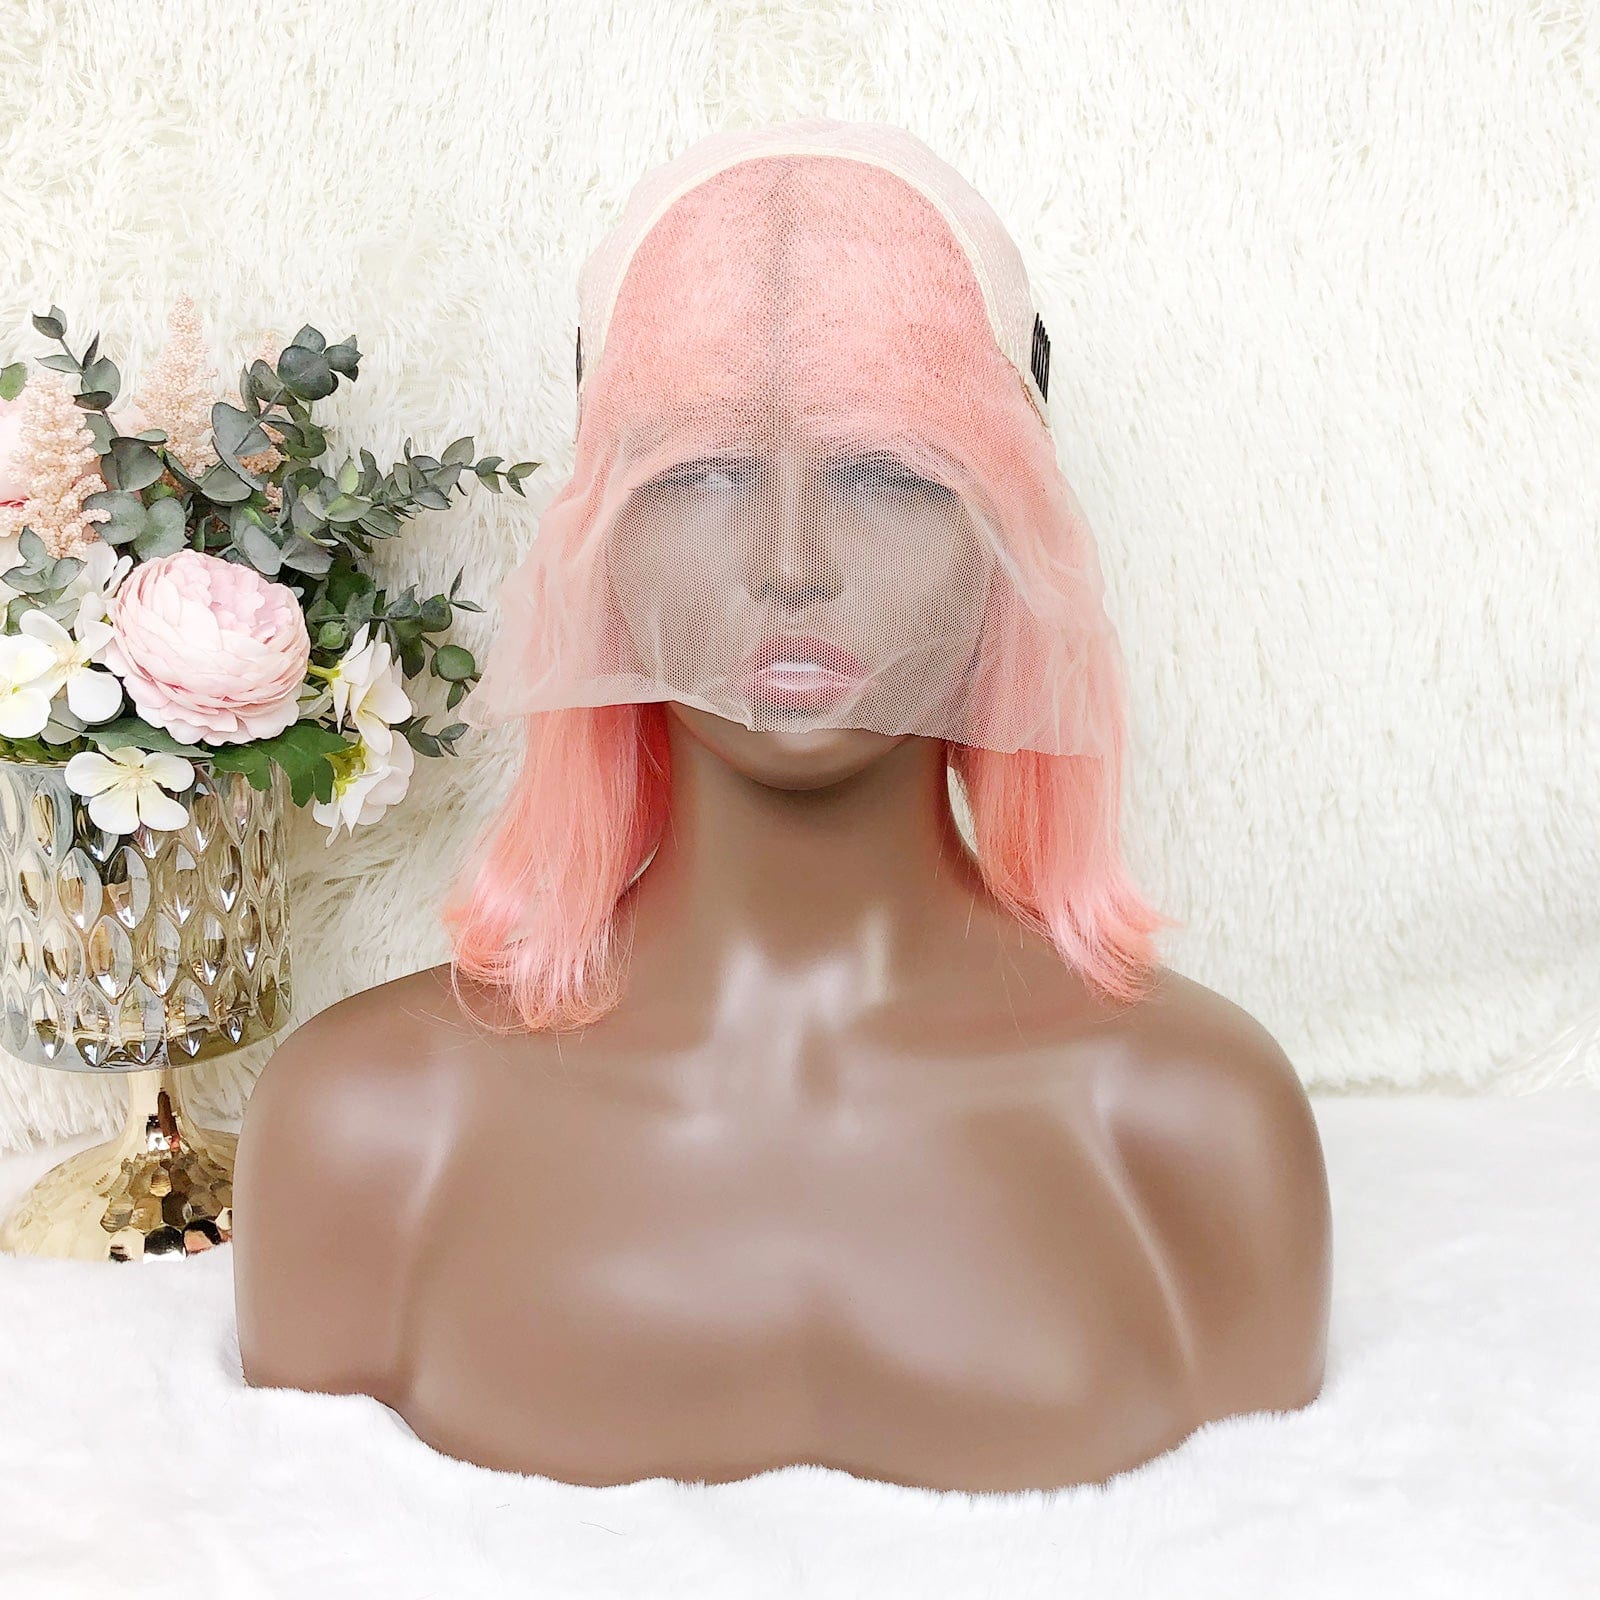 Queen Hair Inc Colored Bob Wig Human Hair Wigs Pink